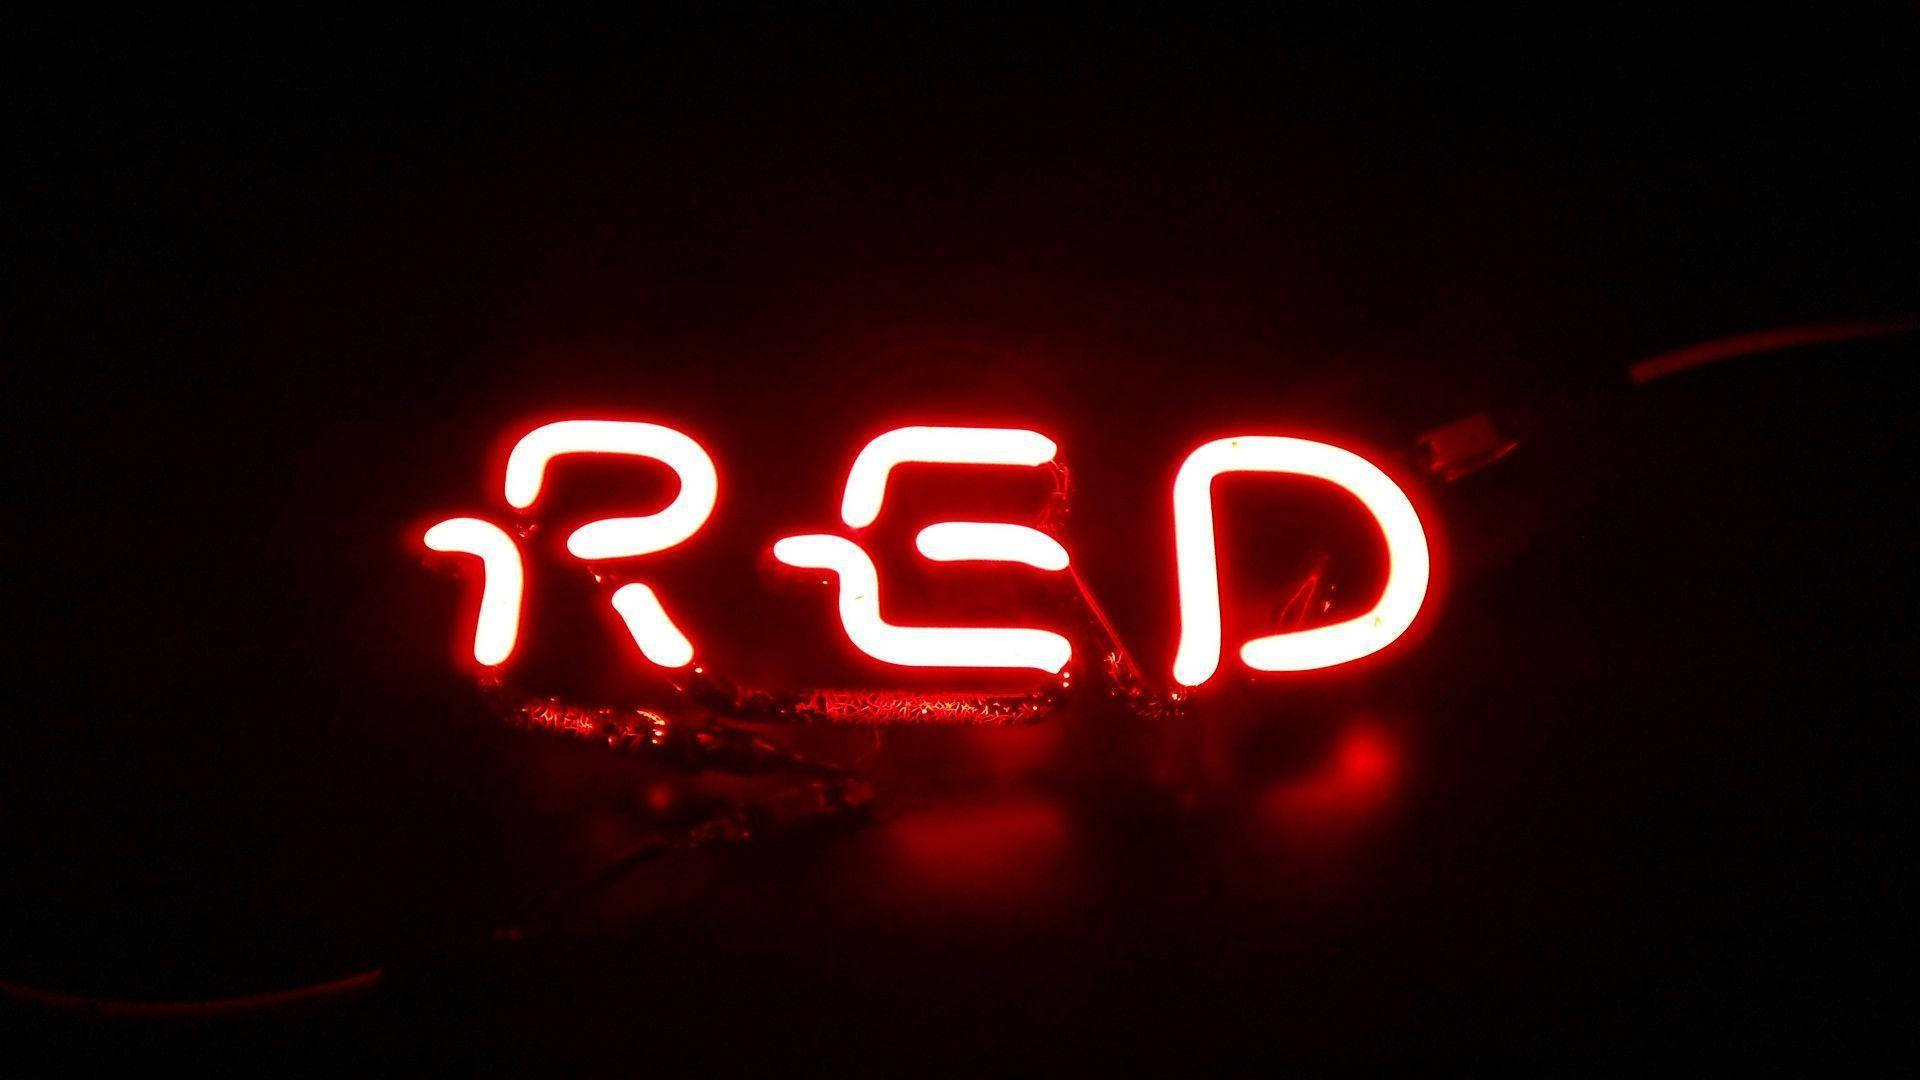 Illuminating Red Aesthetic Neon Text Light Background